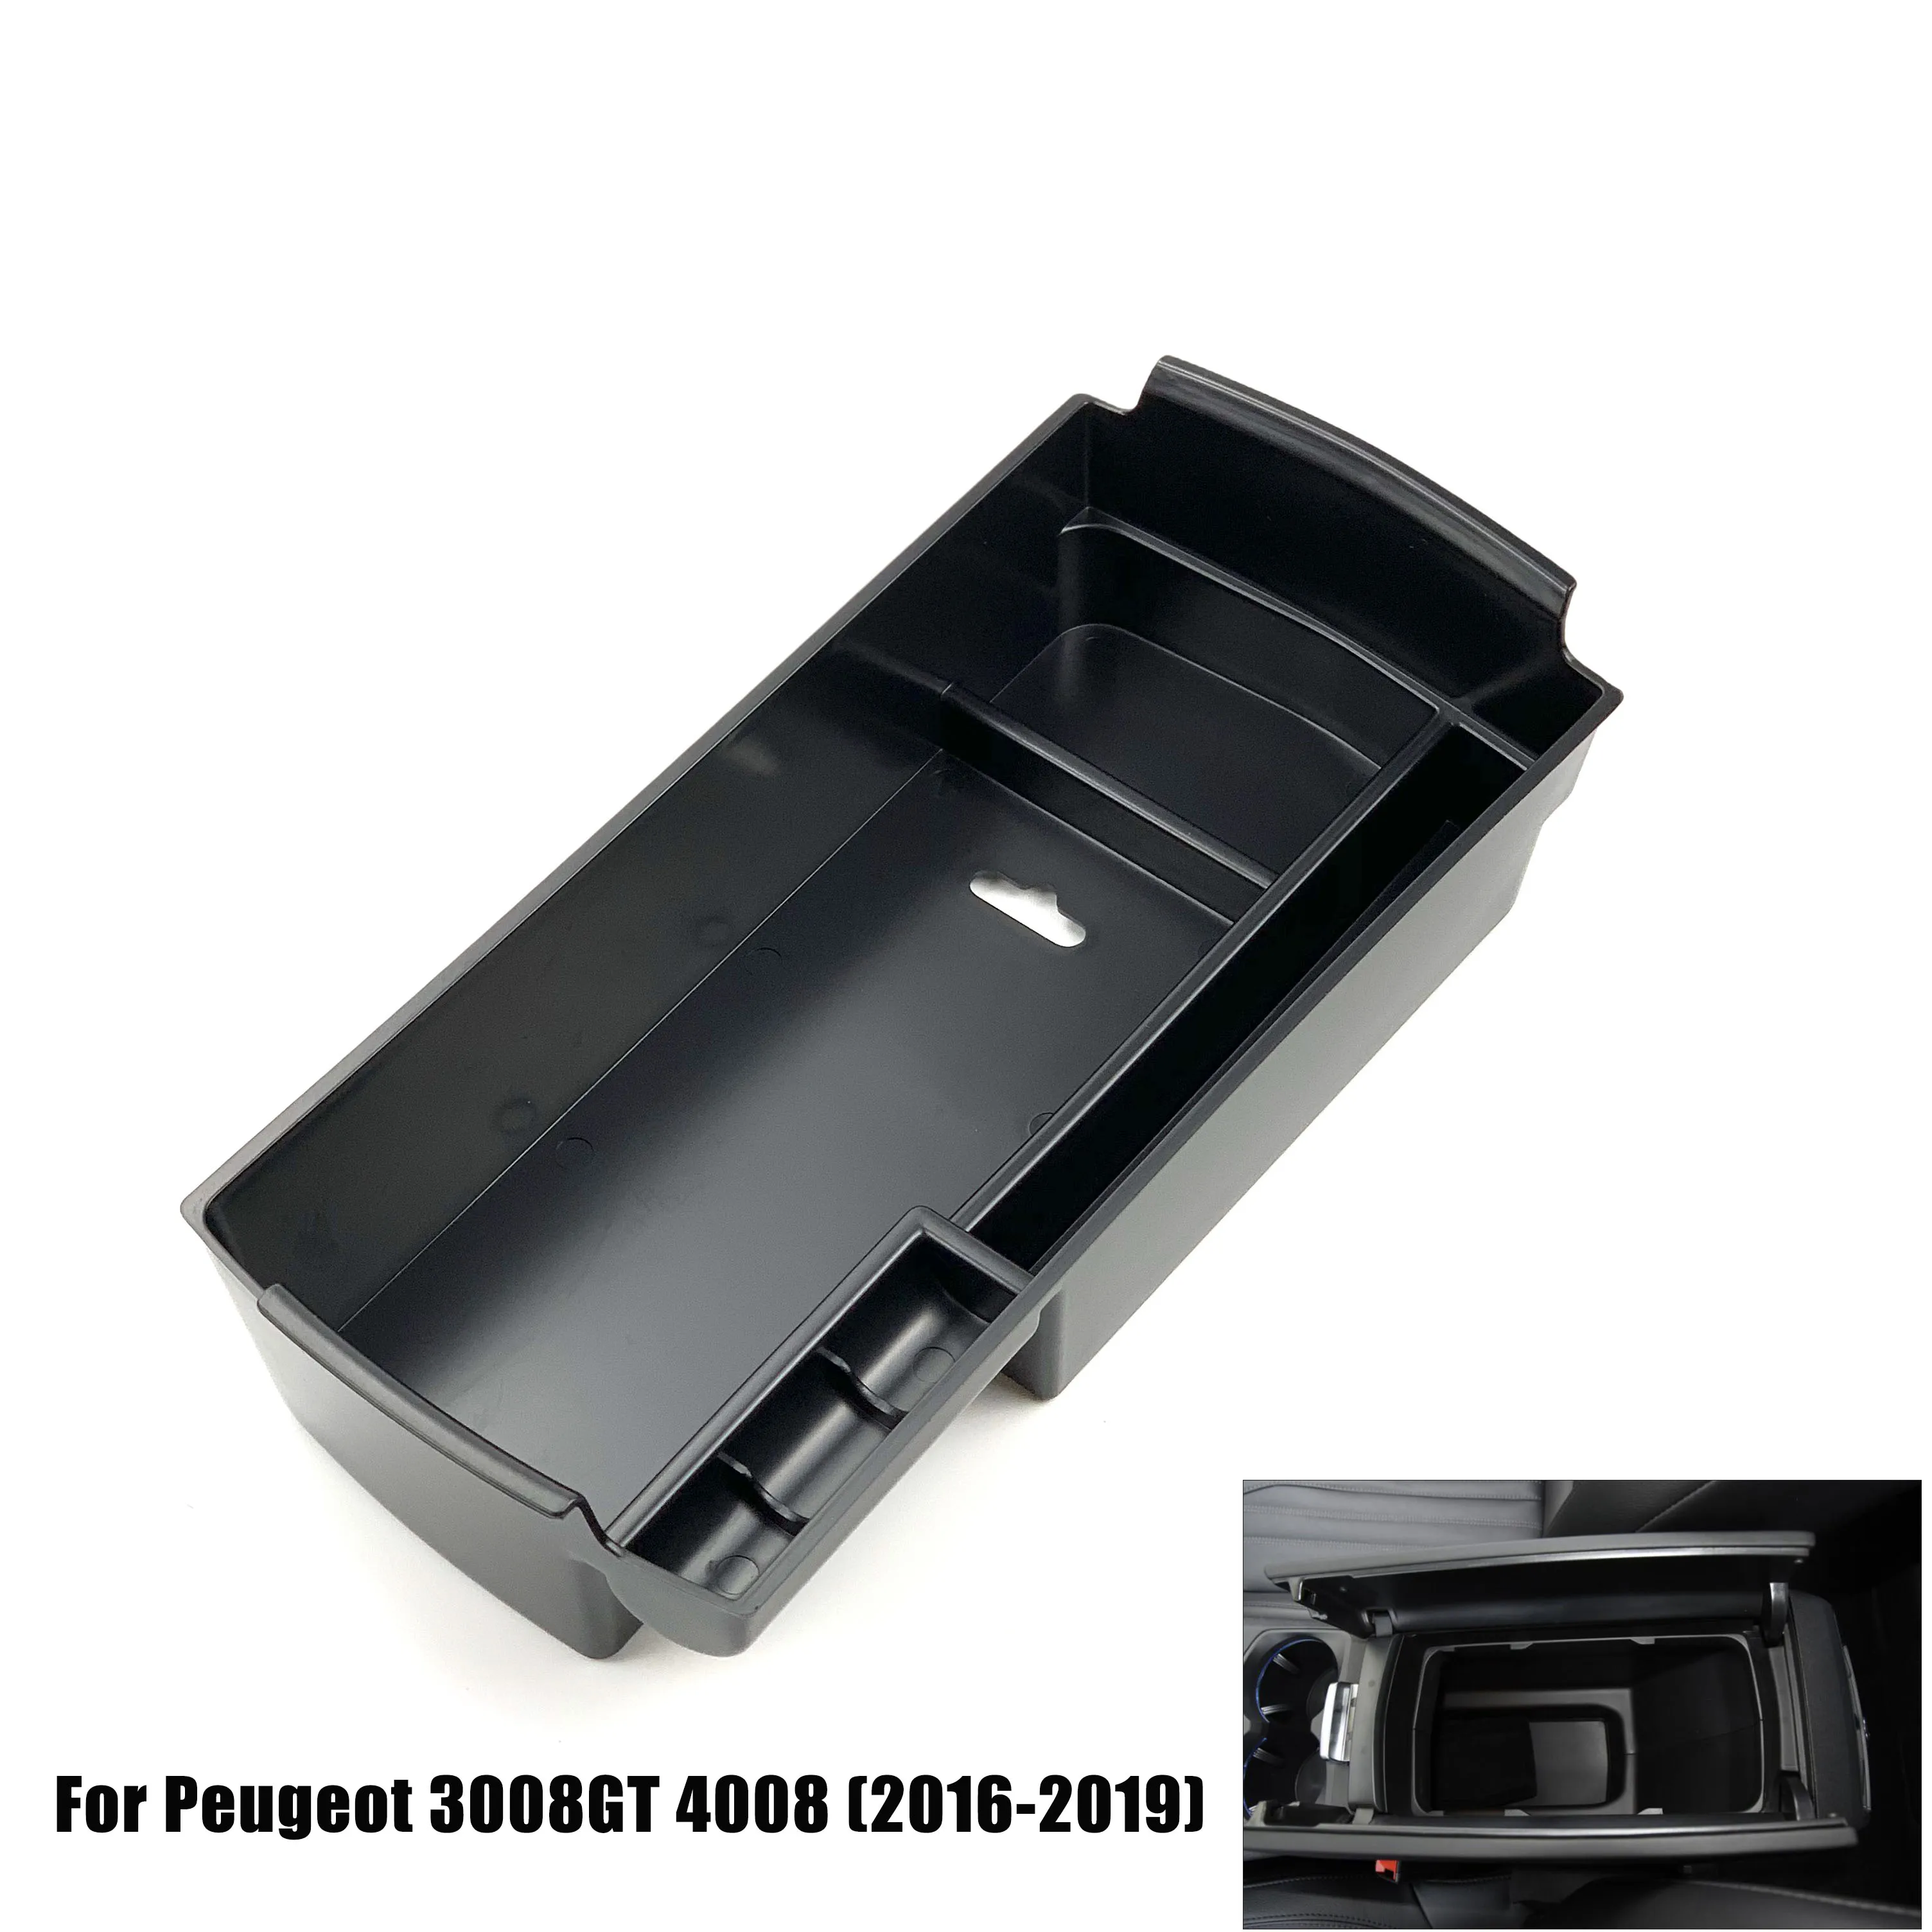 For Peugeot 208 e208 308 408 2008 GT e2008 3008 4008 5008 DS7 Car Accessories Center Armrest Storage Box Organizer Tray Pallet images - 6